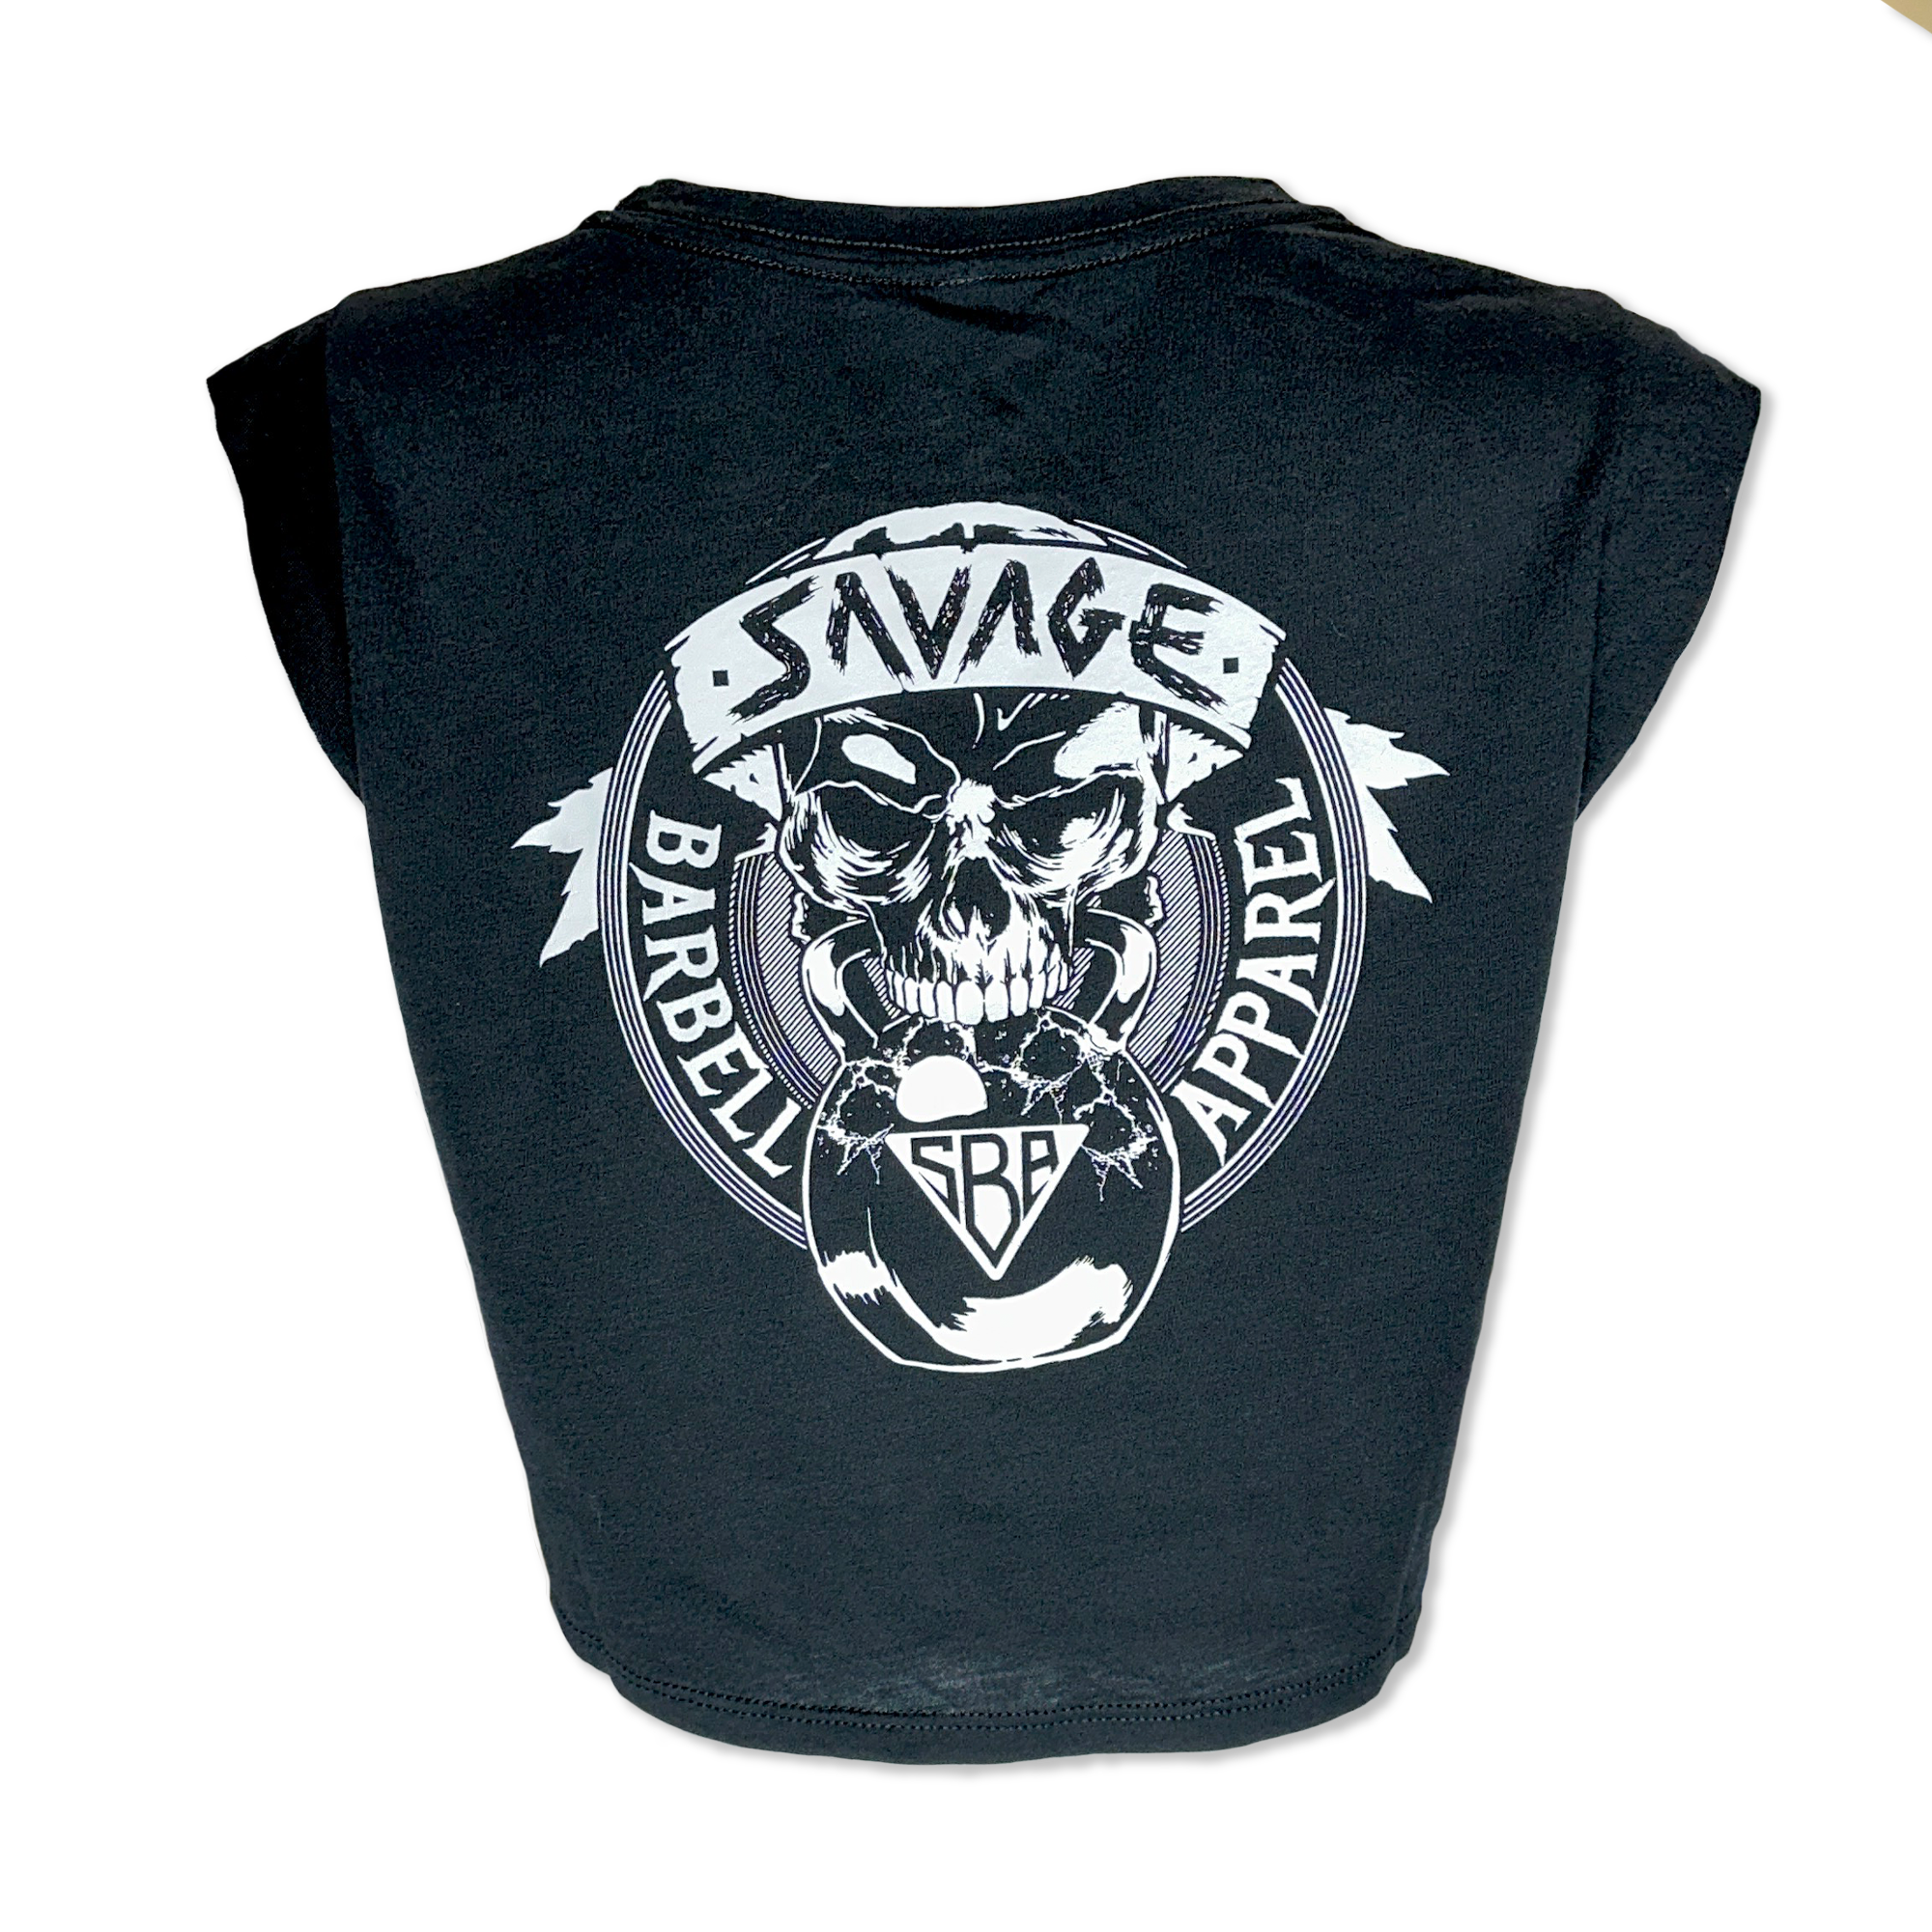 Women's T-Shirt /Team Savage ~ Black - Savage Barbell Apparel